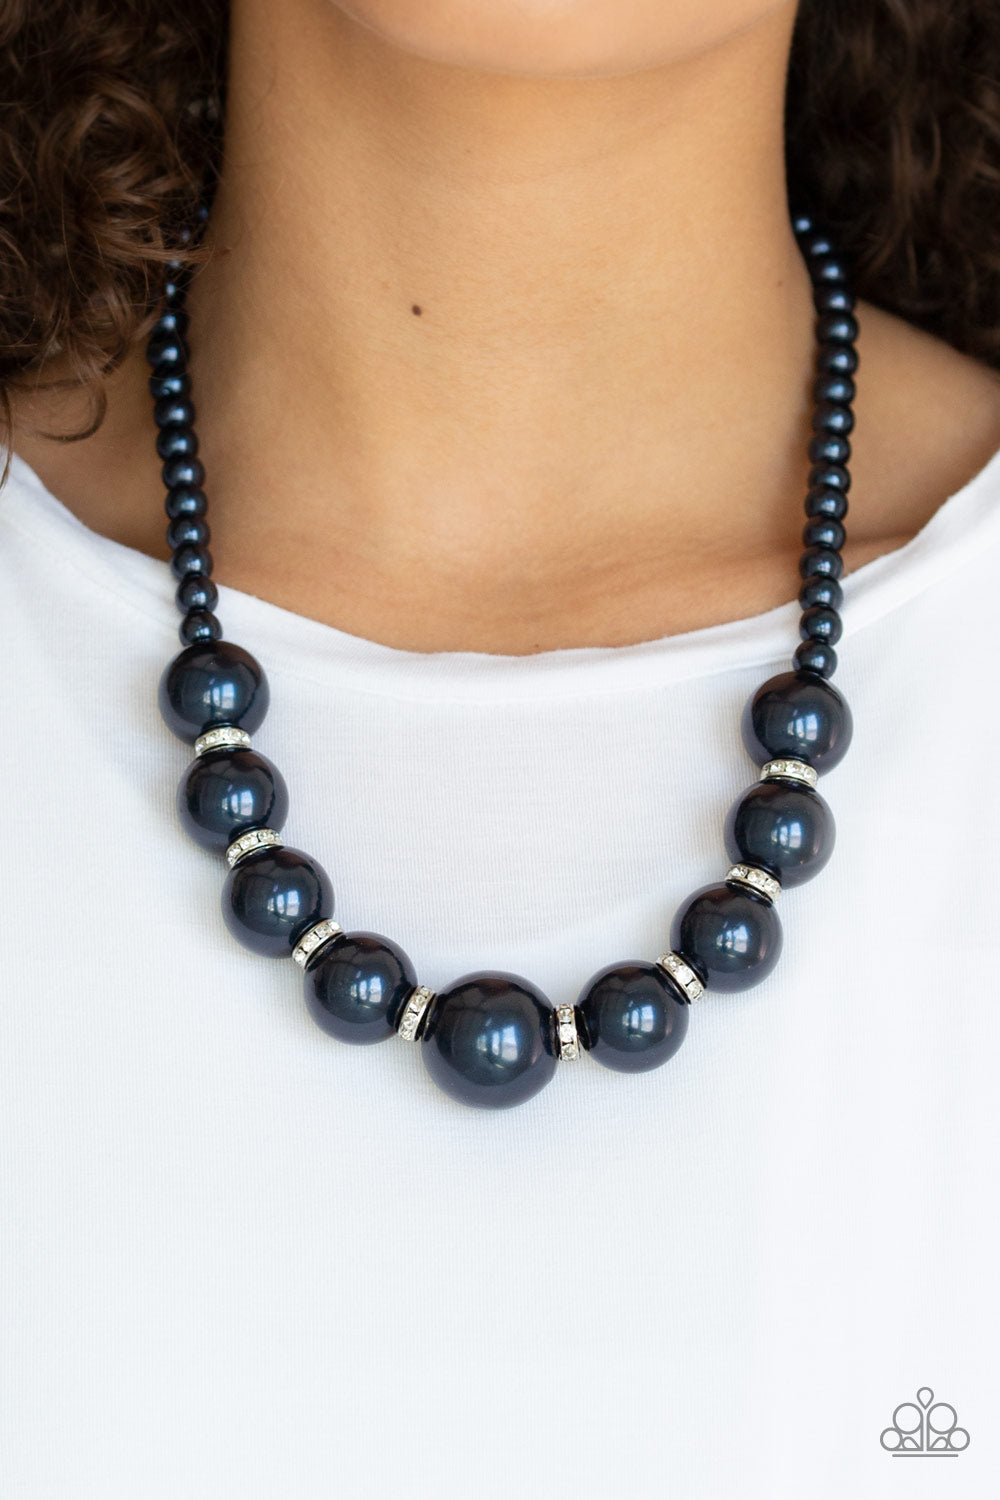 SoHo Socialite - Blue necklace